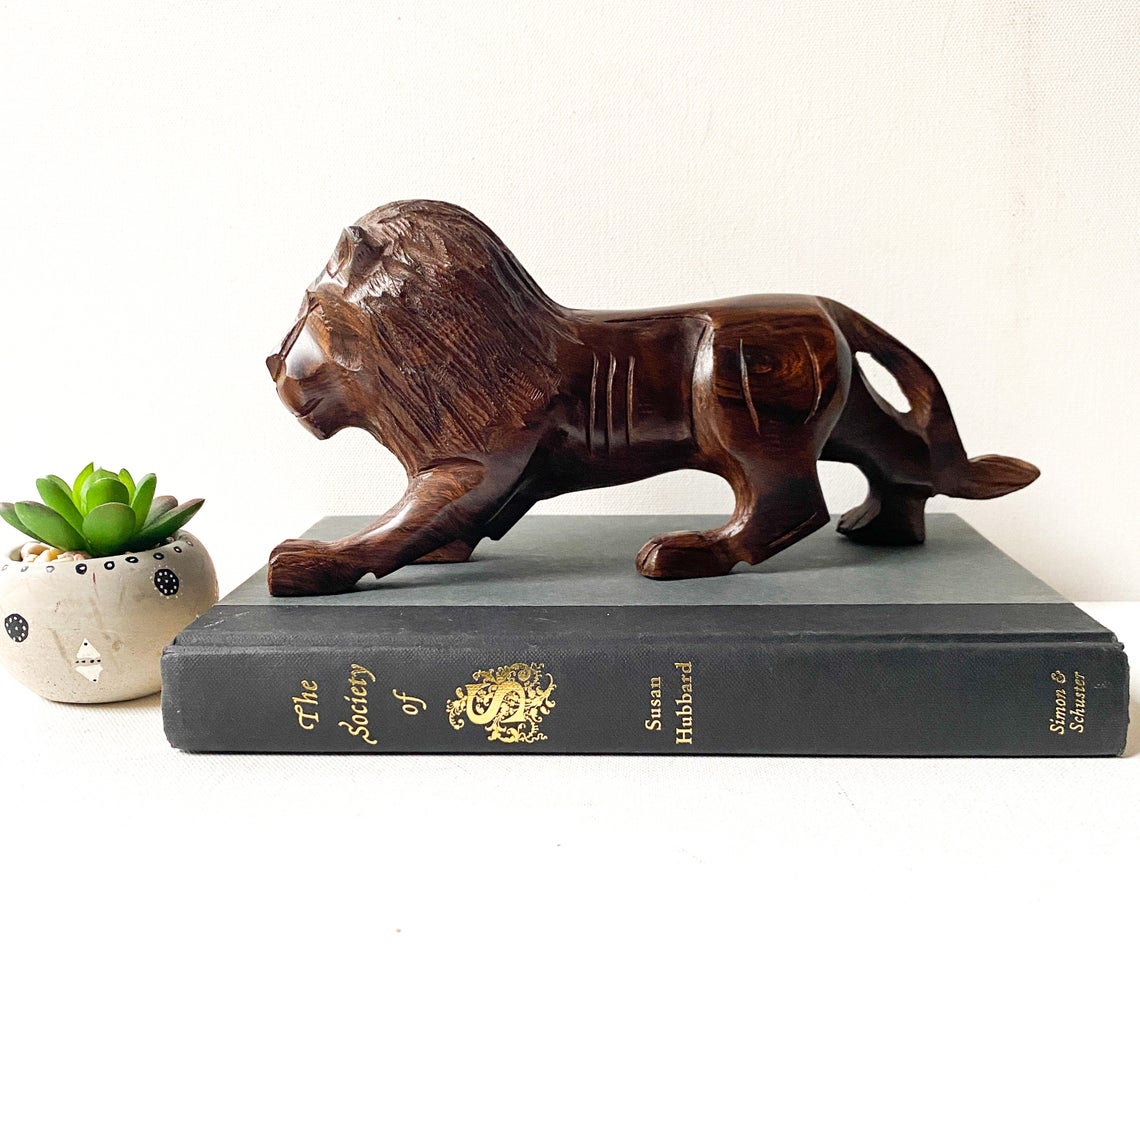 Vintage Ironwood Lion Sculpture